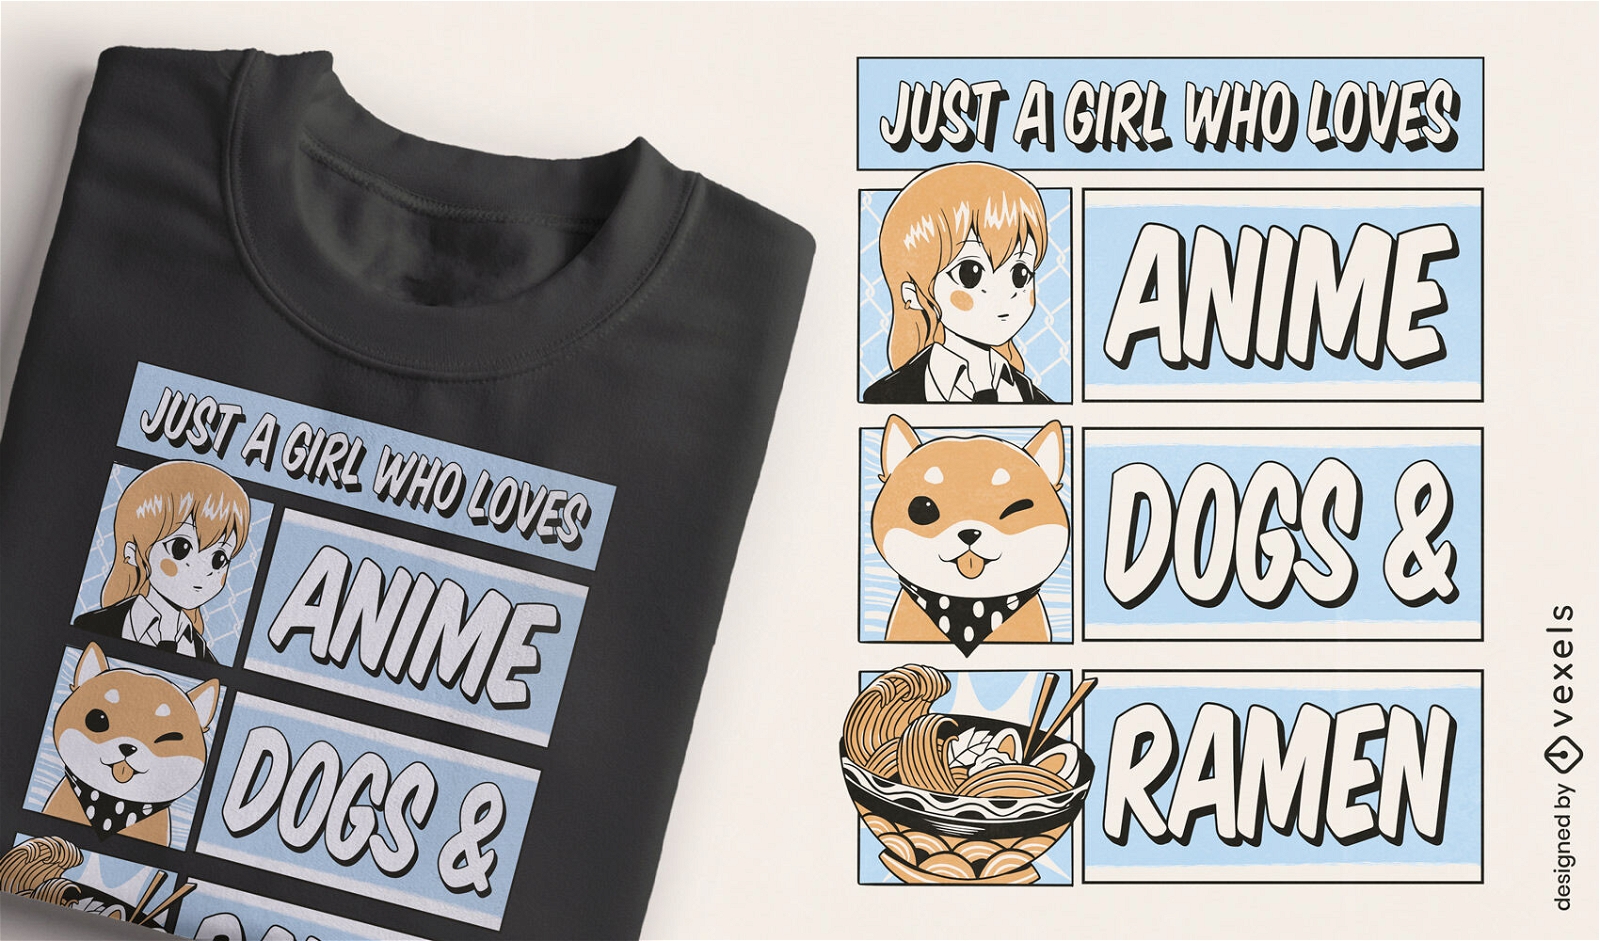 Anime dogs and ramen t-shirt design